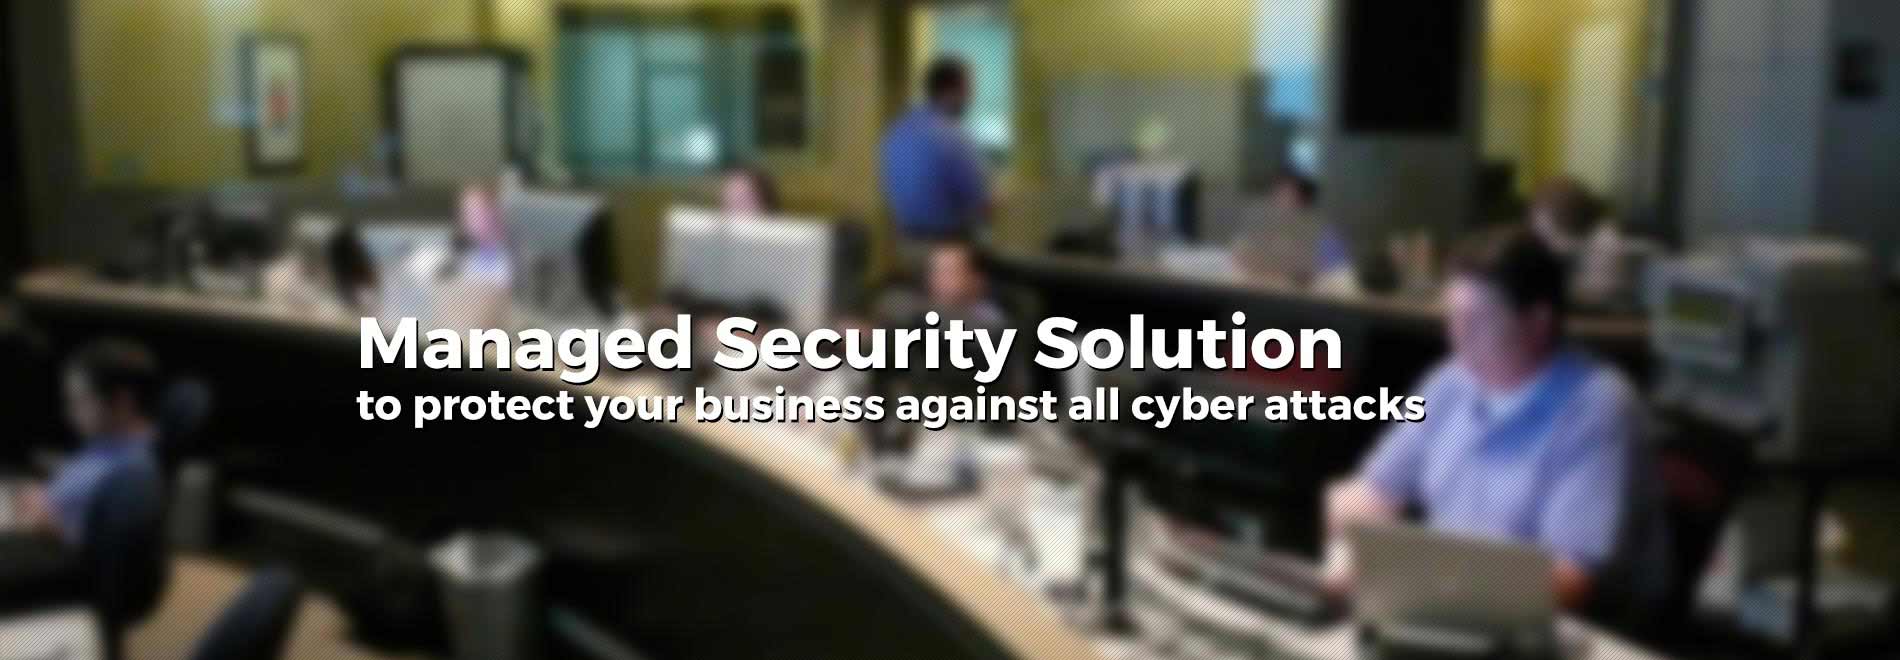 Cyber Security Services Dallas